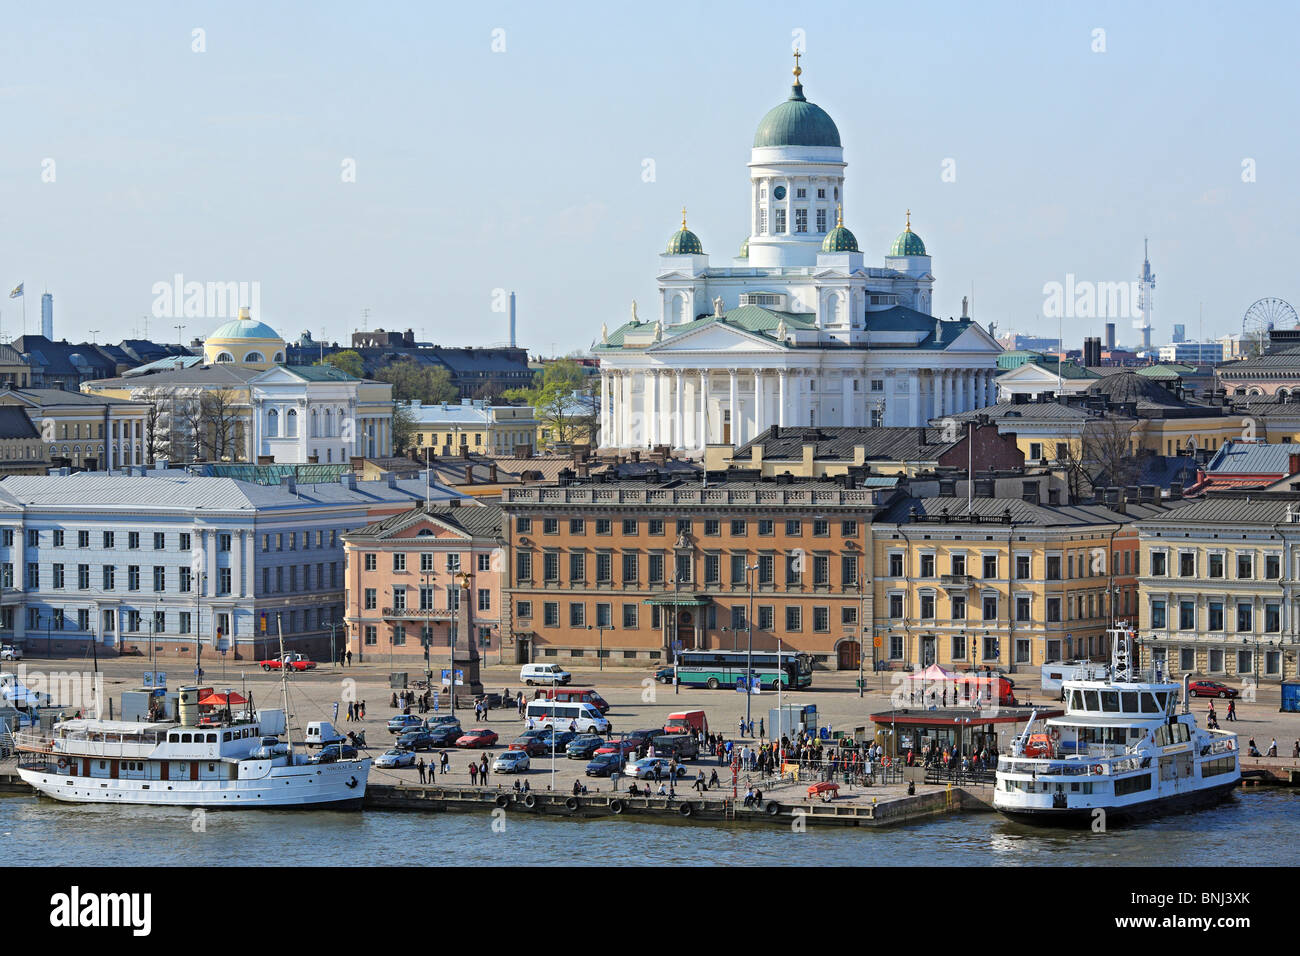 Helsinki Finnland Westeuropa Europa Europäische Tourismus Reisen tagsüber Nordeuropa finnische Stadt Städte Scandinavia Stockfoto